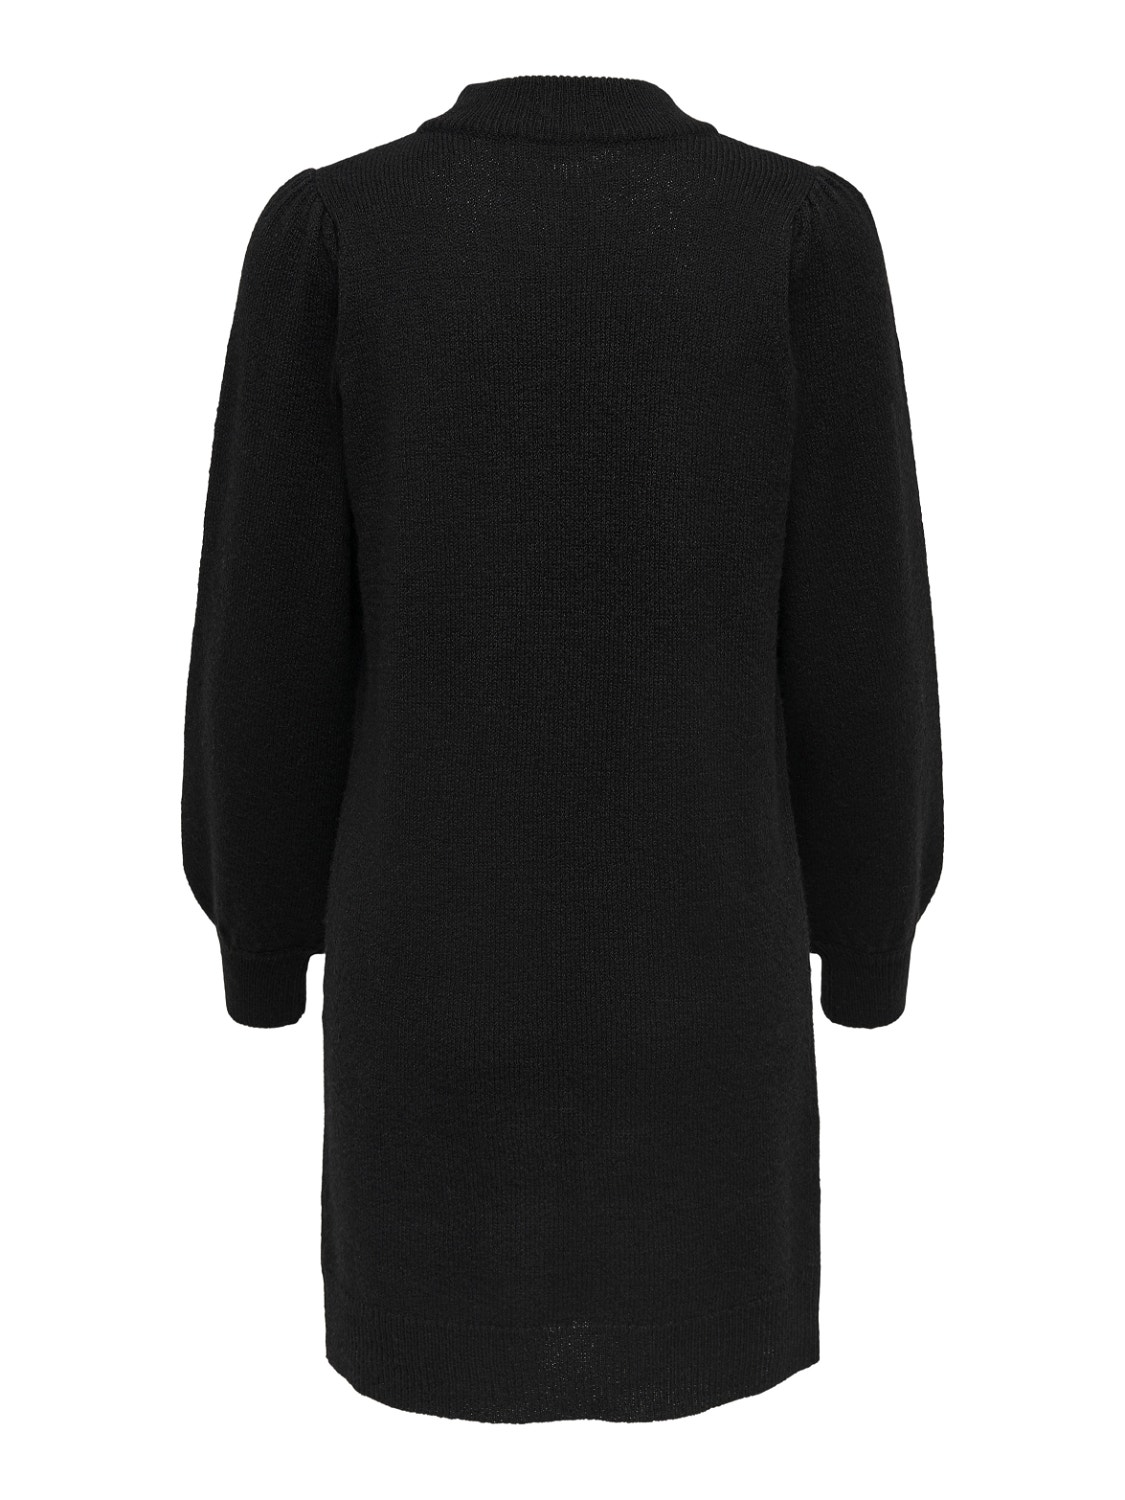 ONLY Loose Fit High neck Volume sleeves Short dress -Black - 15238237